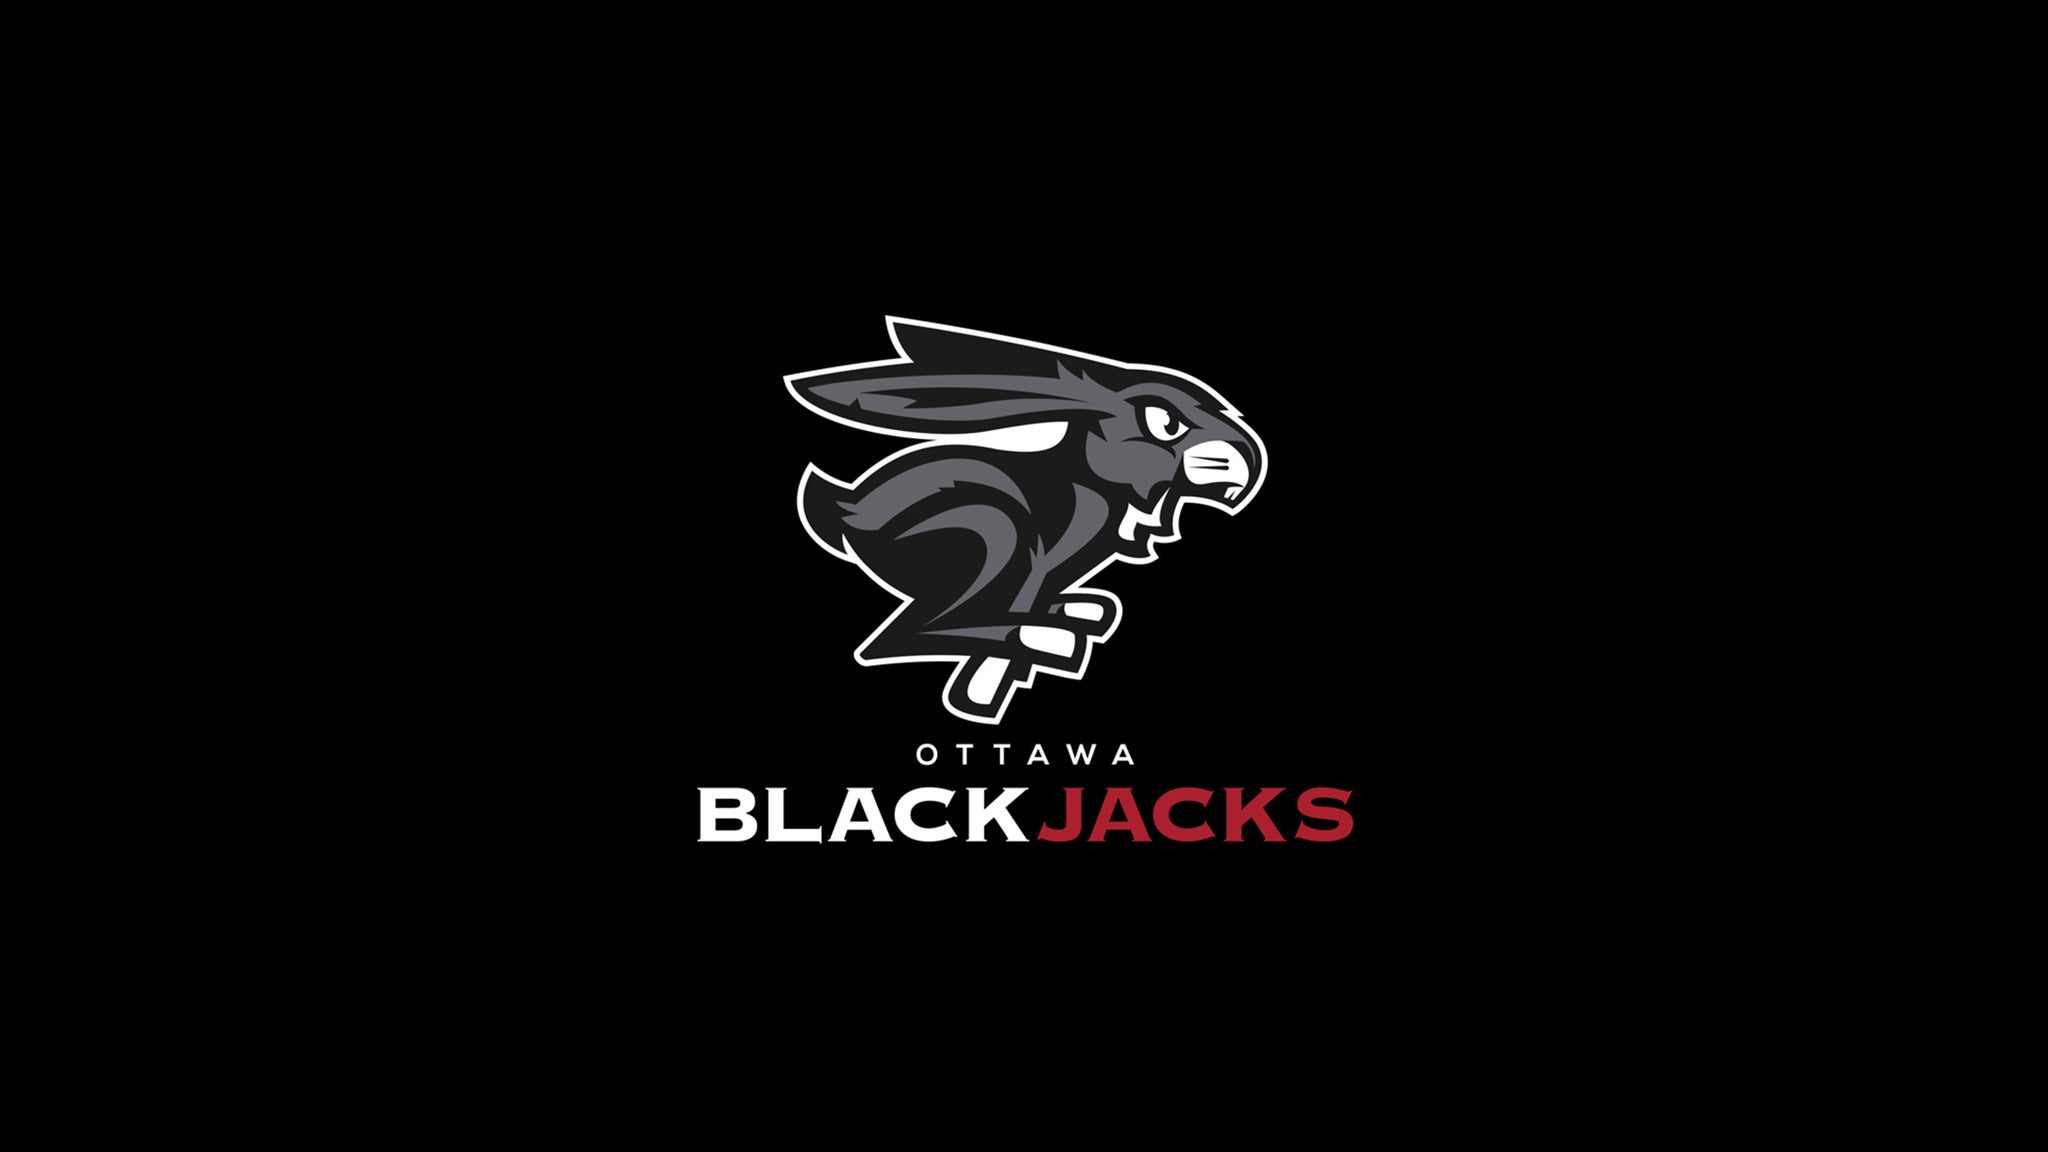 Ottawa BlackJacks vs. Saskatchewan Rattlers in Ottawa promo photo for Fan Zone  presale offer code